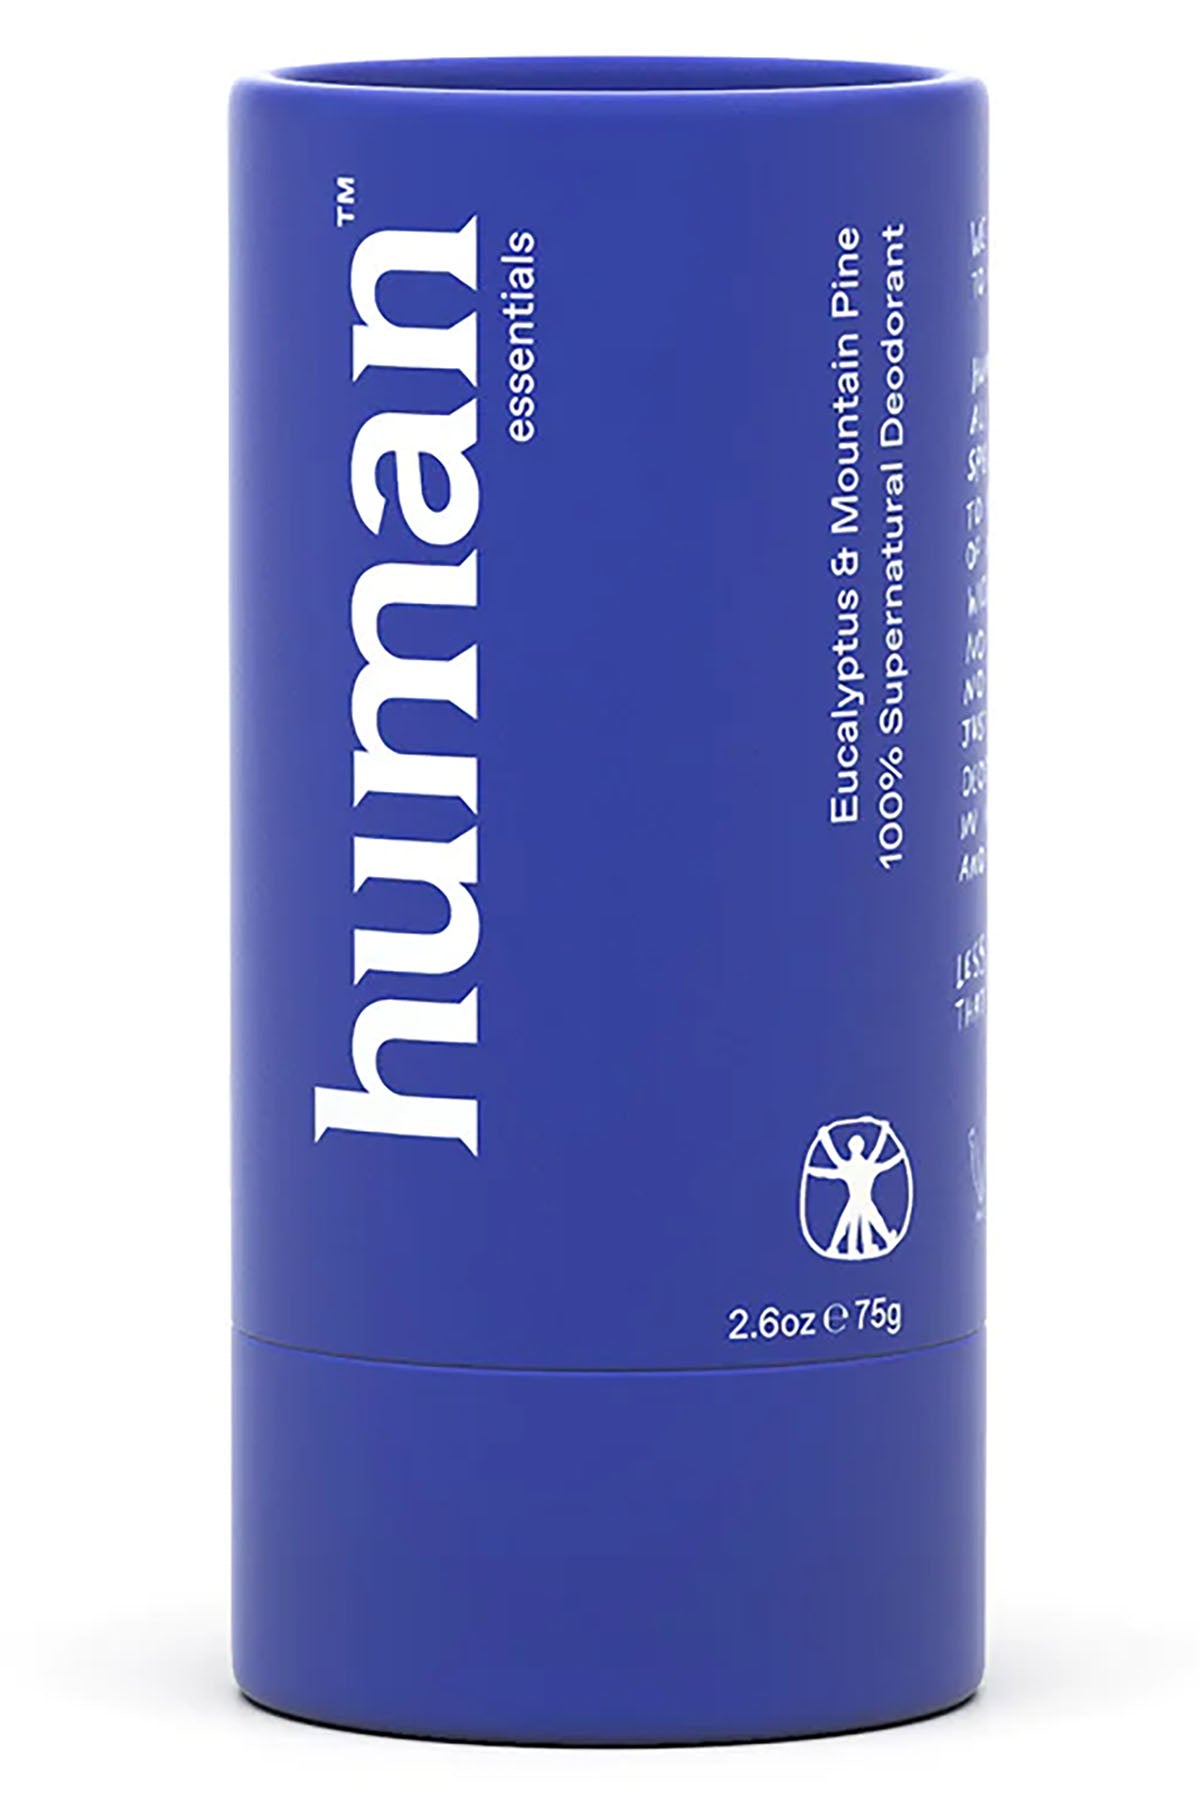 Human Essentials Mountain Pine and Eucalyptus Natural Deodorant